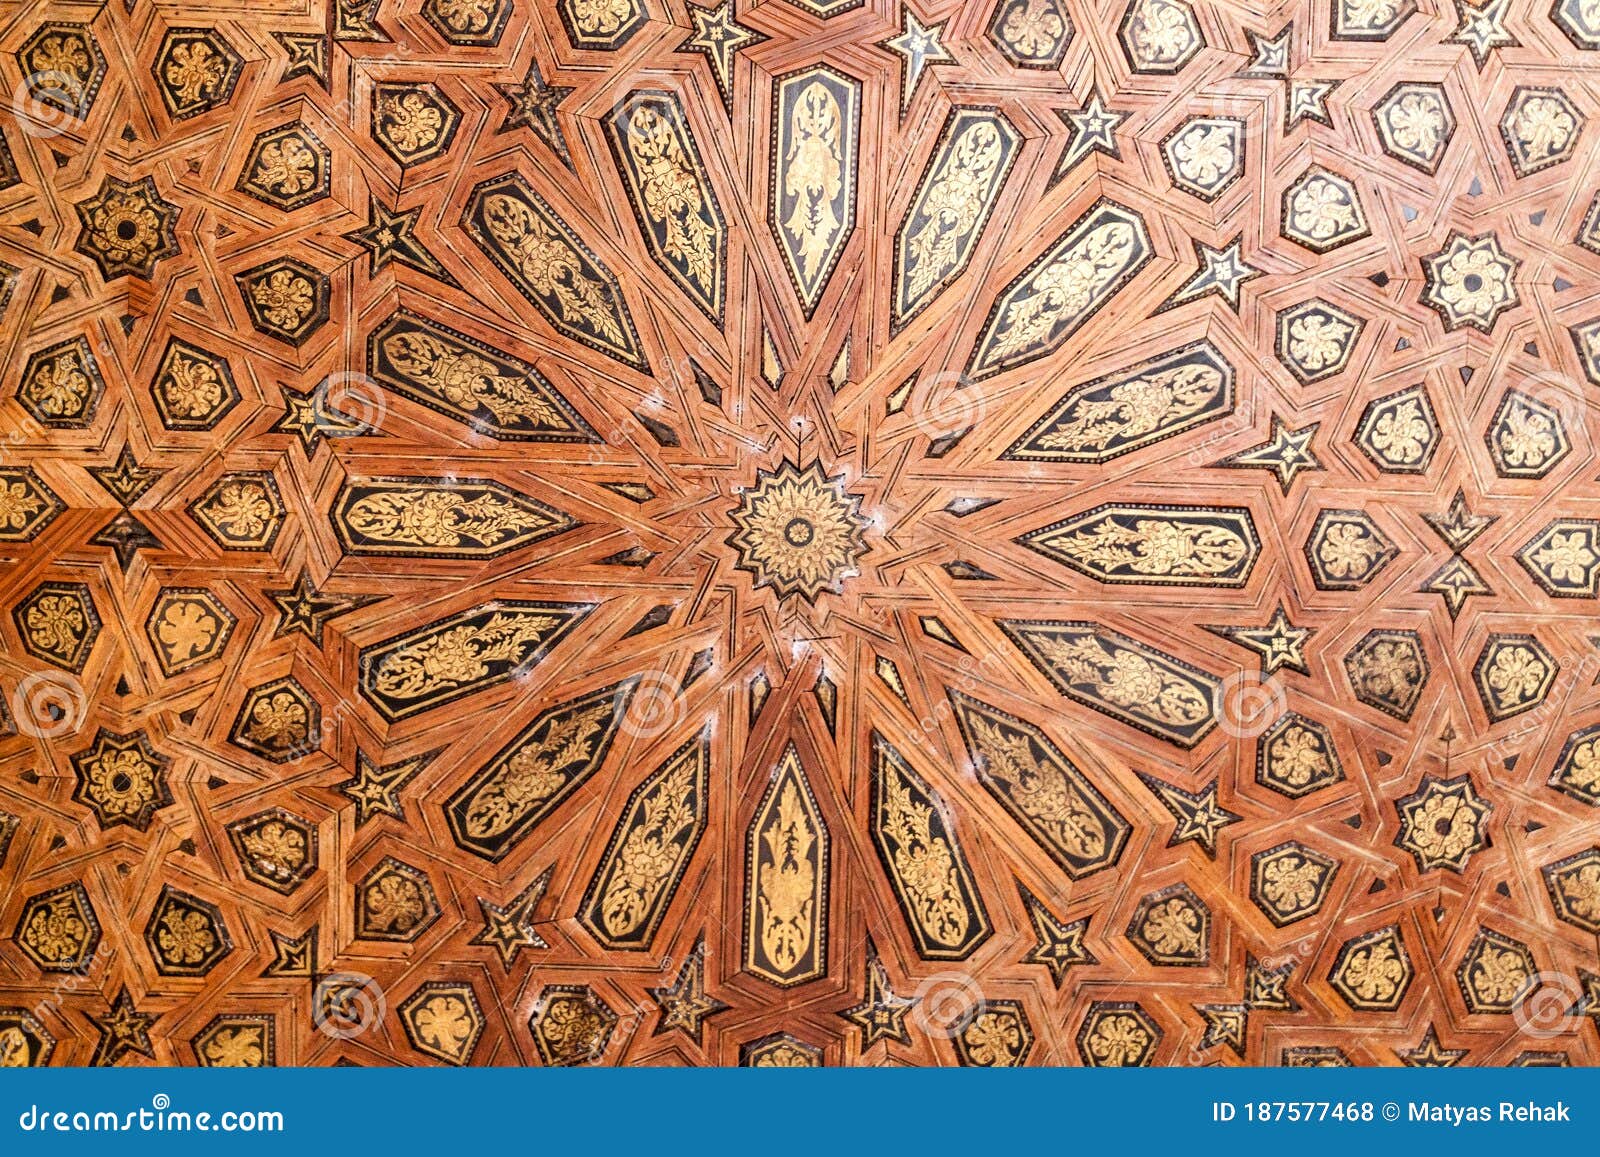 ceiling in nasrid palaces (palacios nazaries) at alhambra in granada, spa